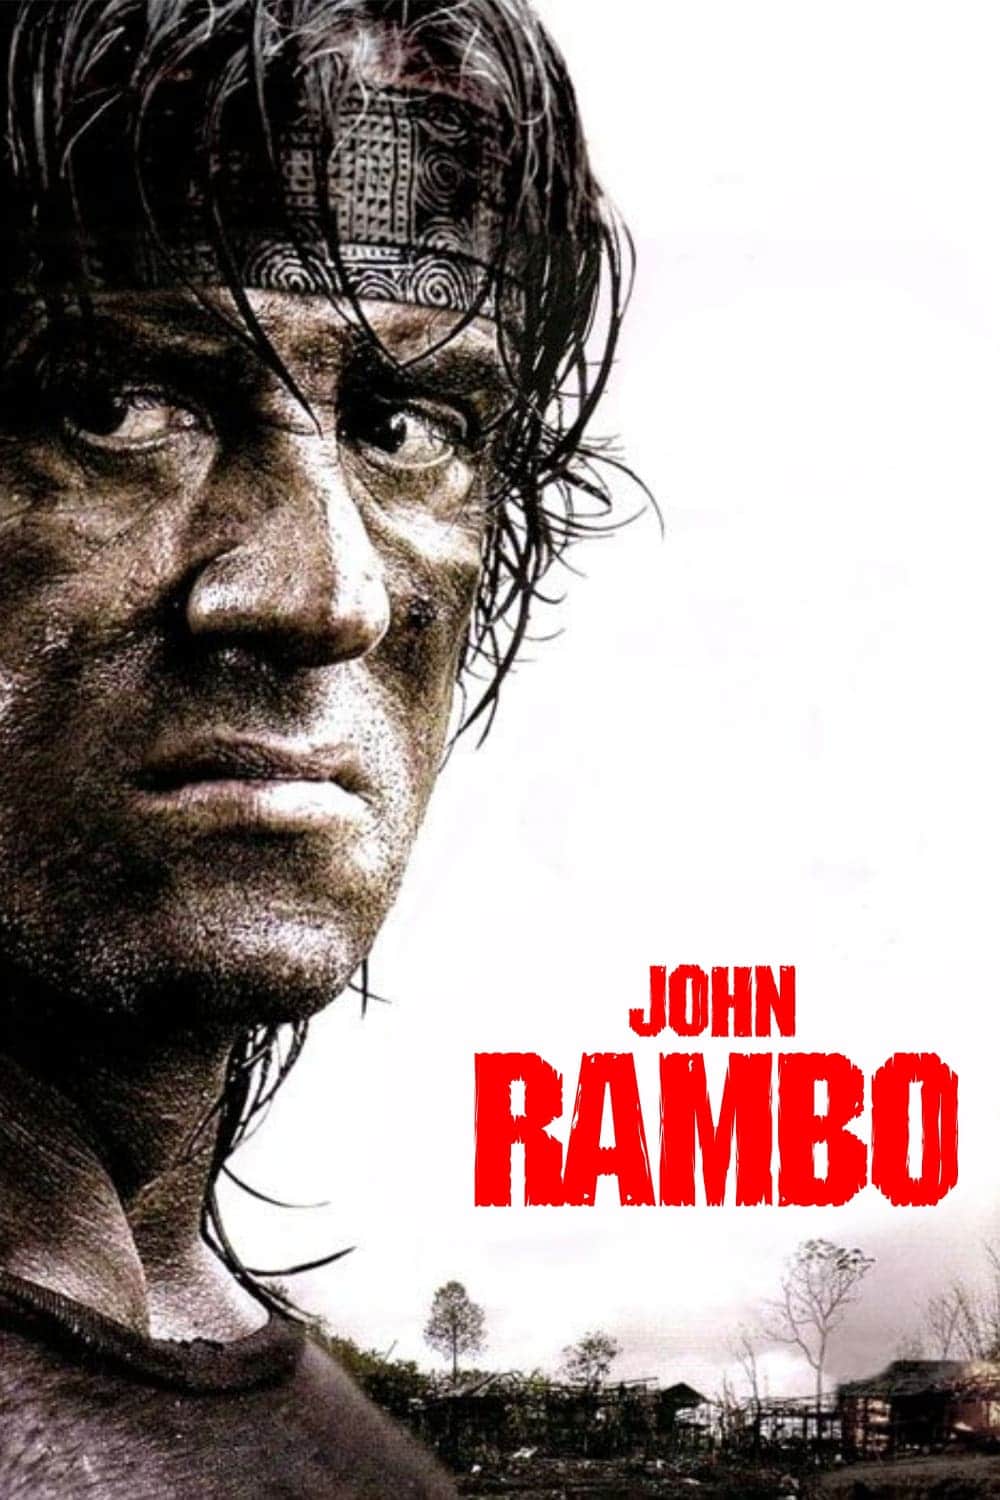 Plakat von "John Rambo"